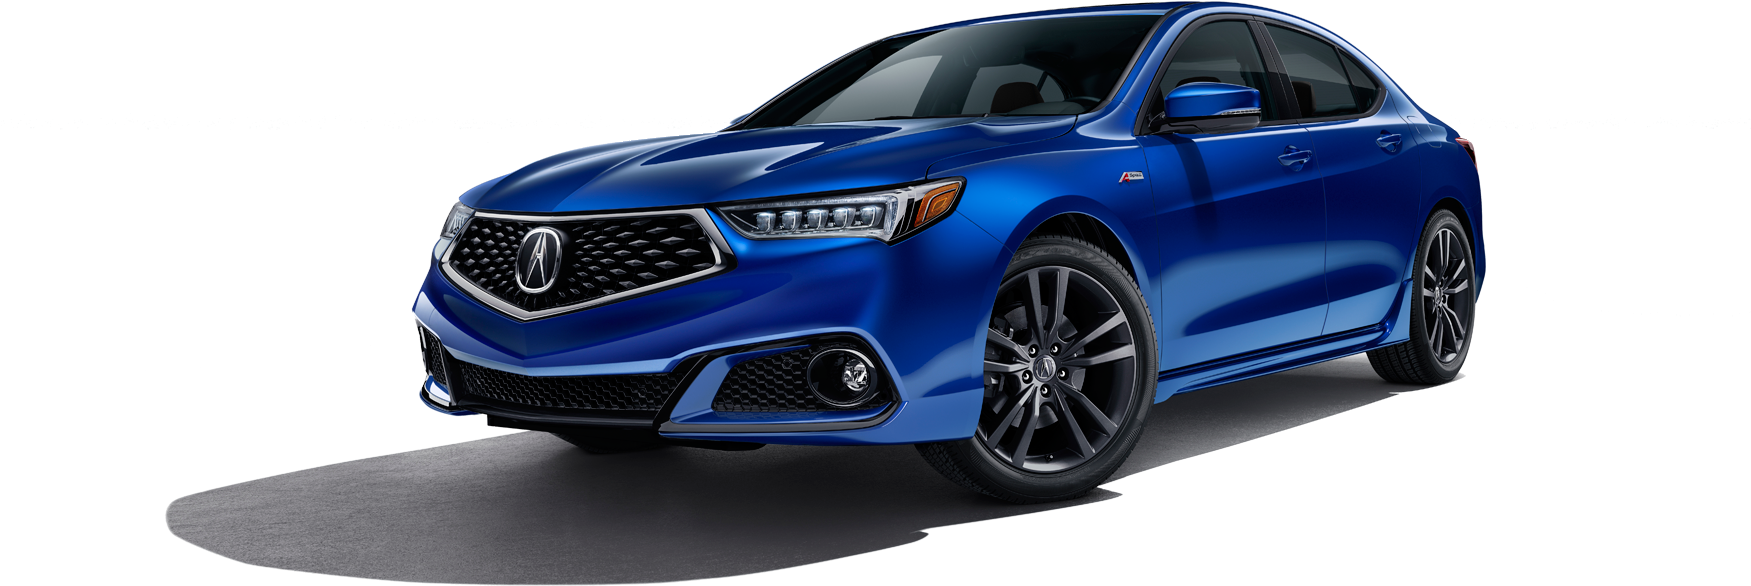 Blue Acura Sedan Profile View